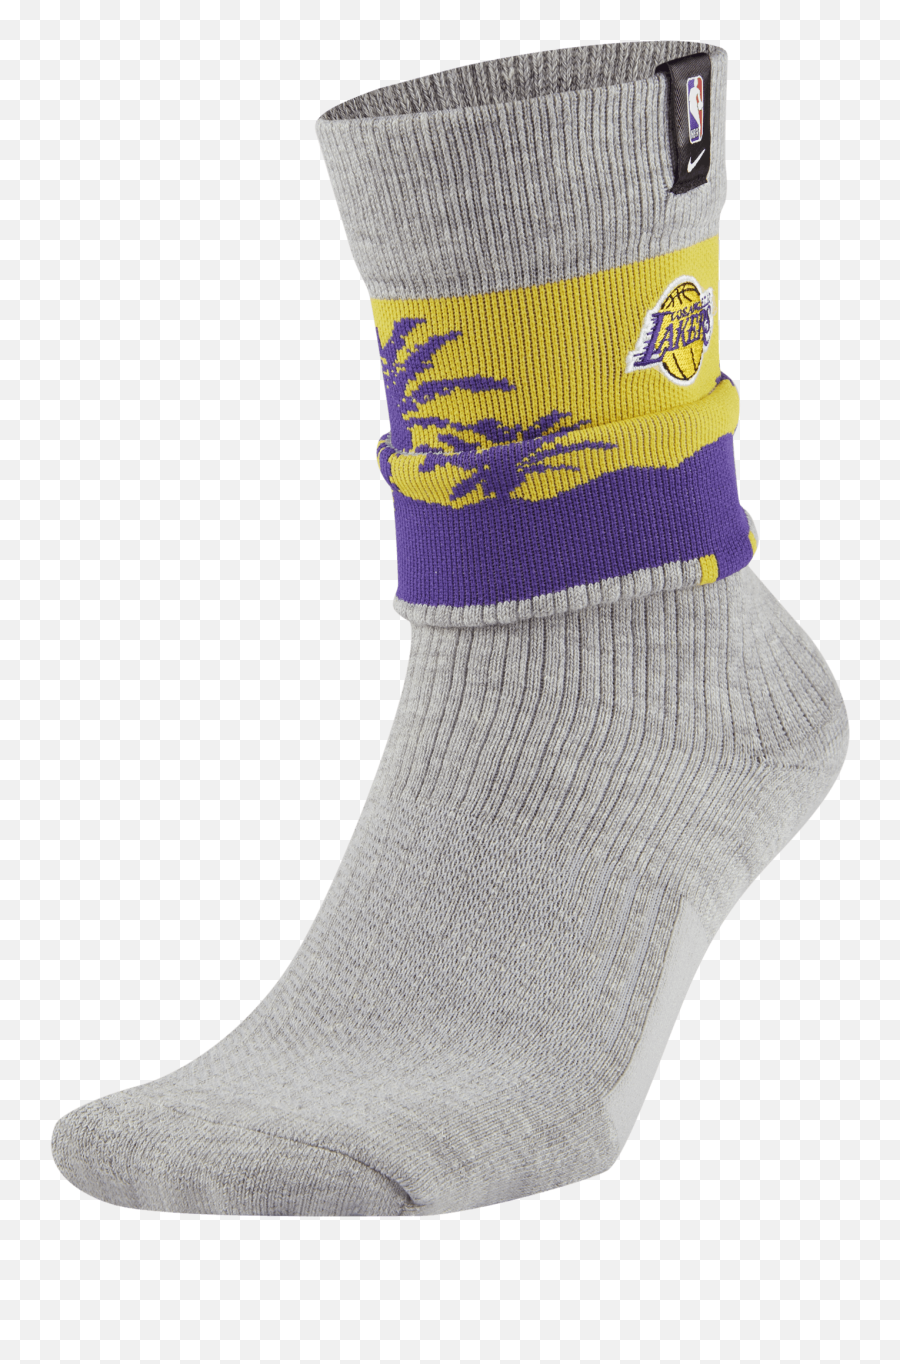 Socks The Basketball Store Solestory Emoji,Nba Logo Socks